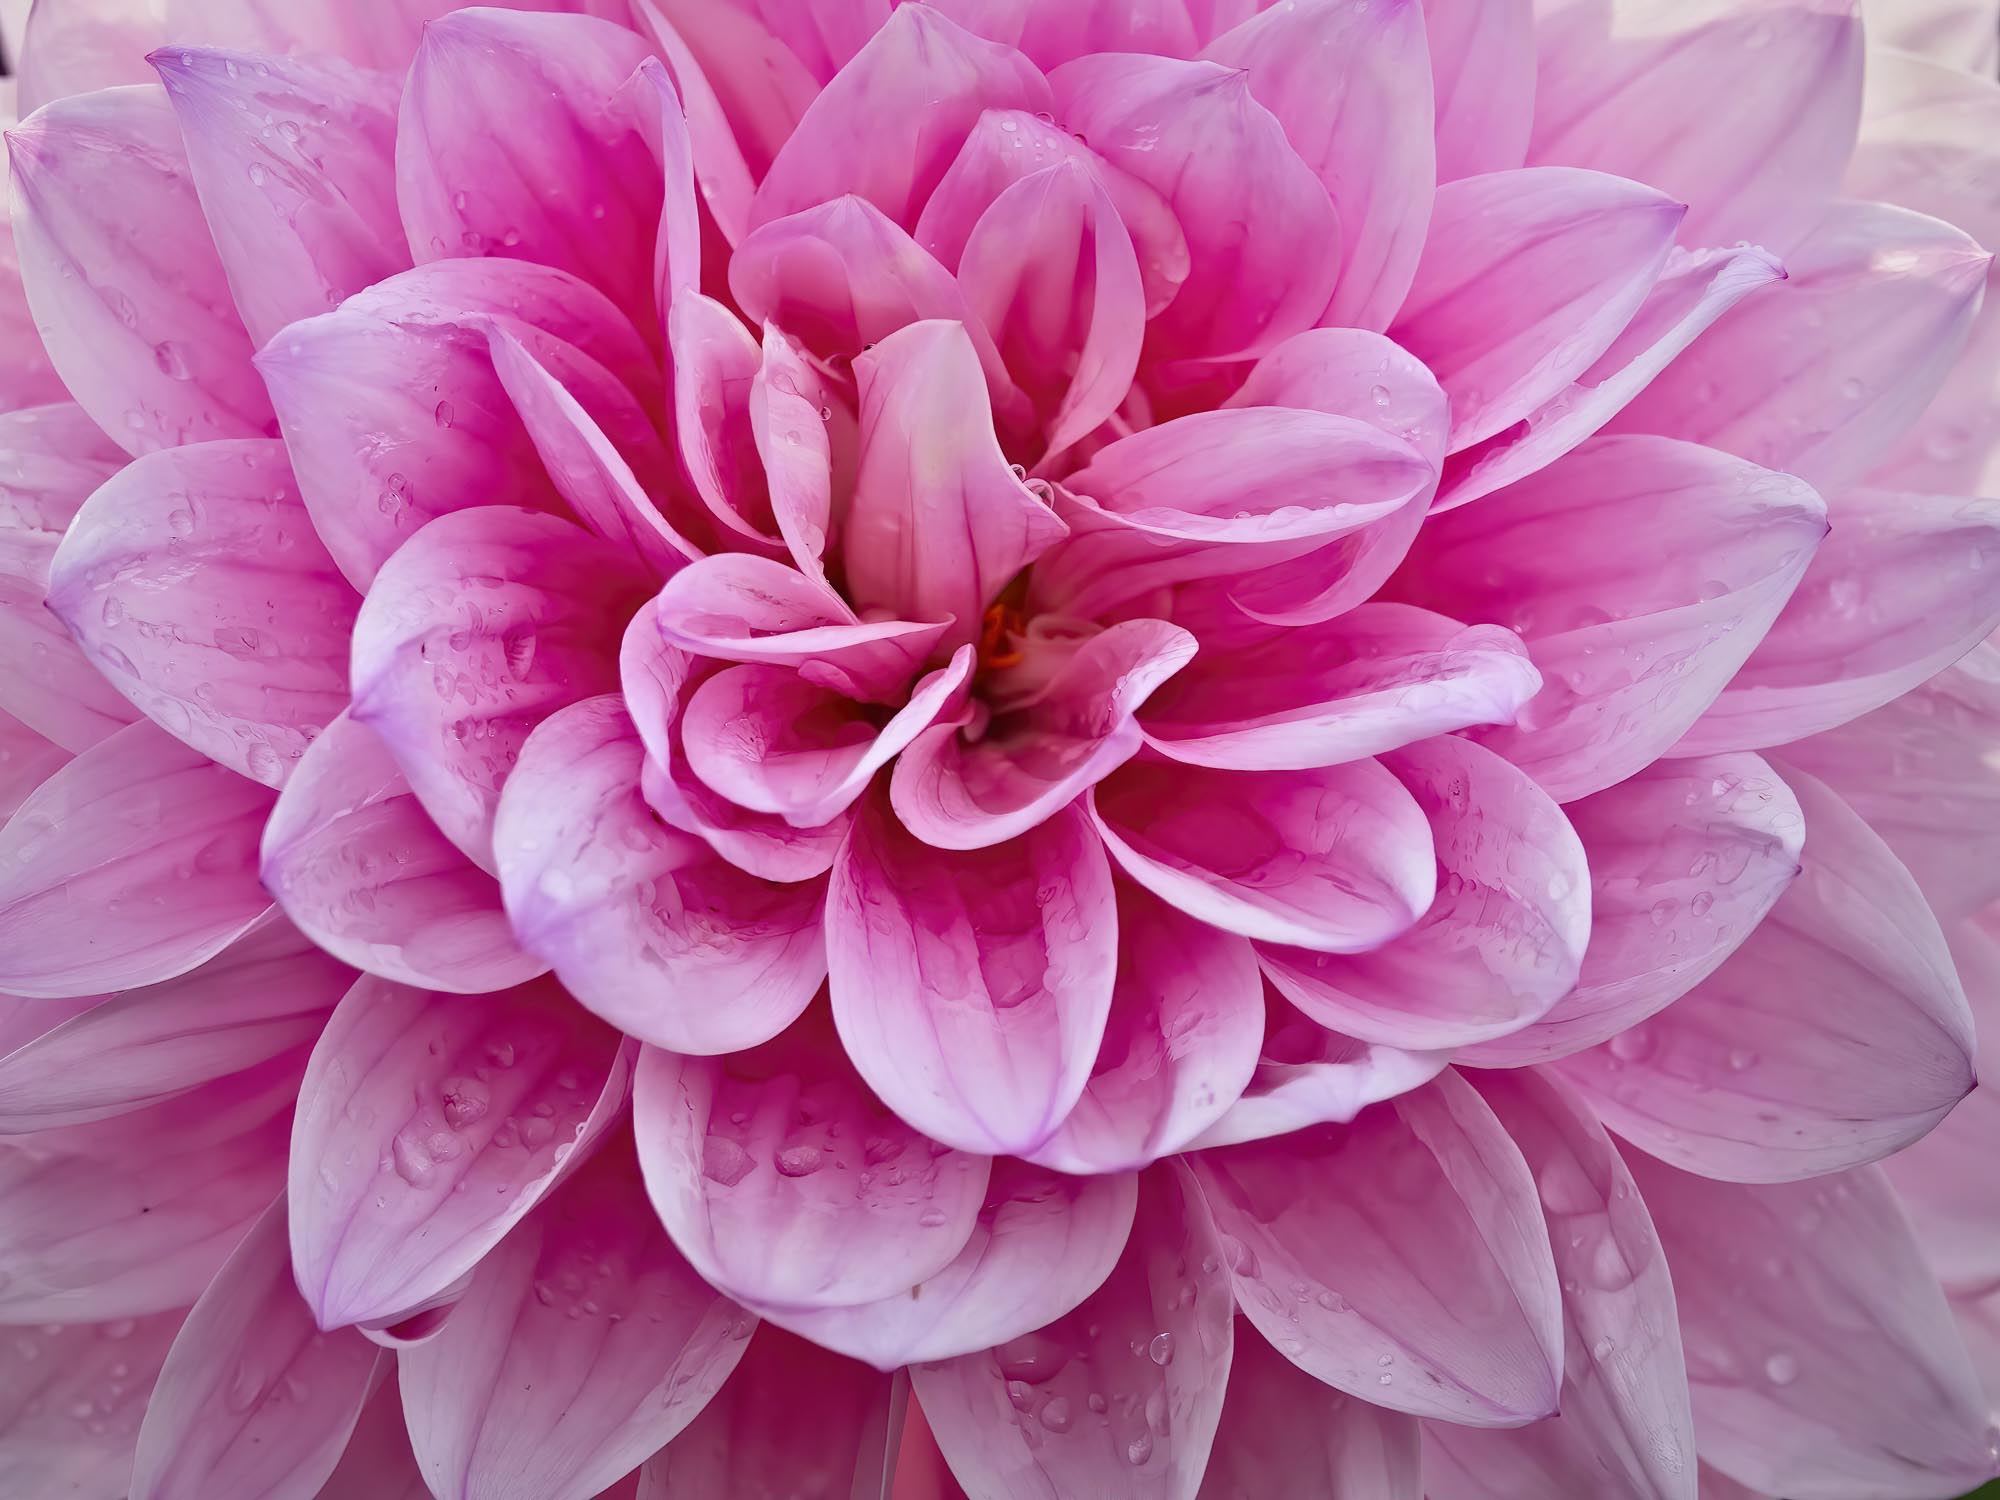 Inside the pink dahlia